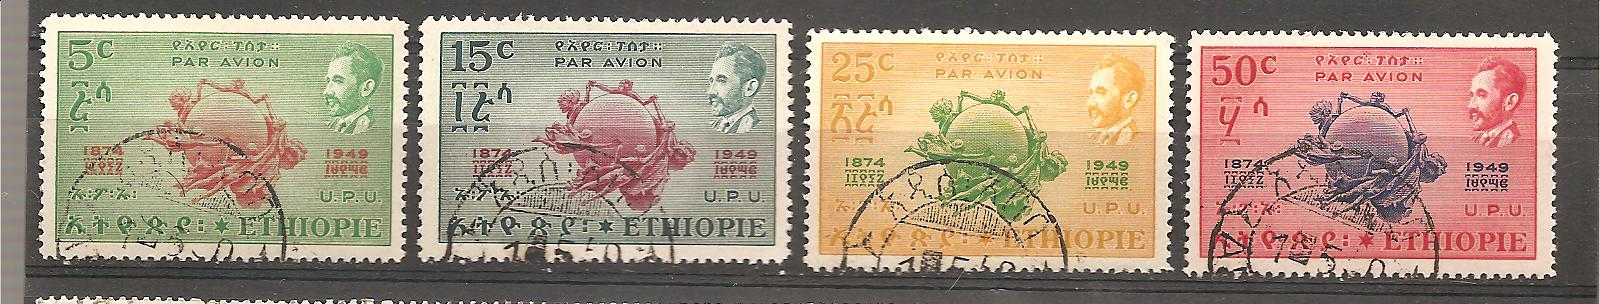 41494 - Etiopia - serie completa usata di posta aerea: UPU - 1949